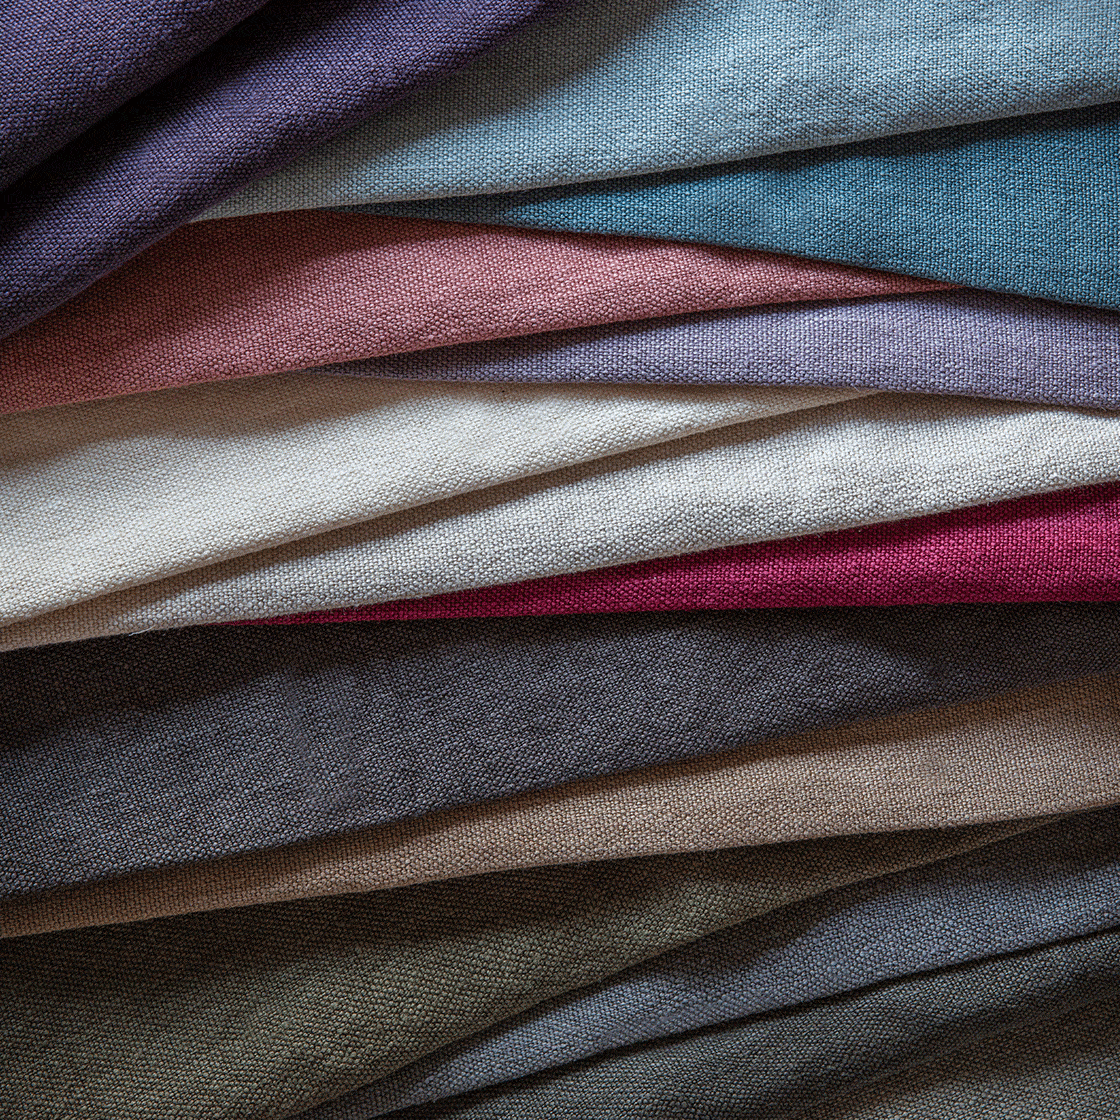 Orkney linen collection - Beaumont & Fletcher